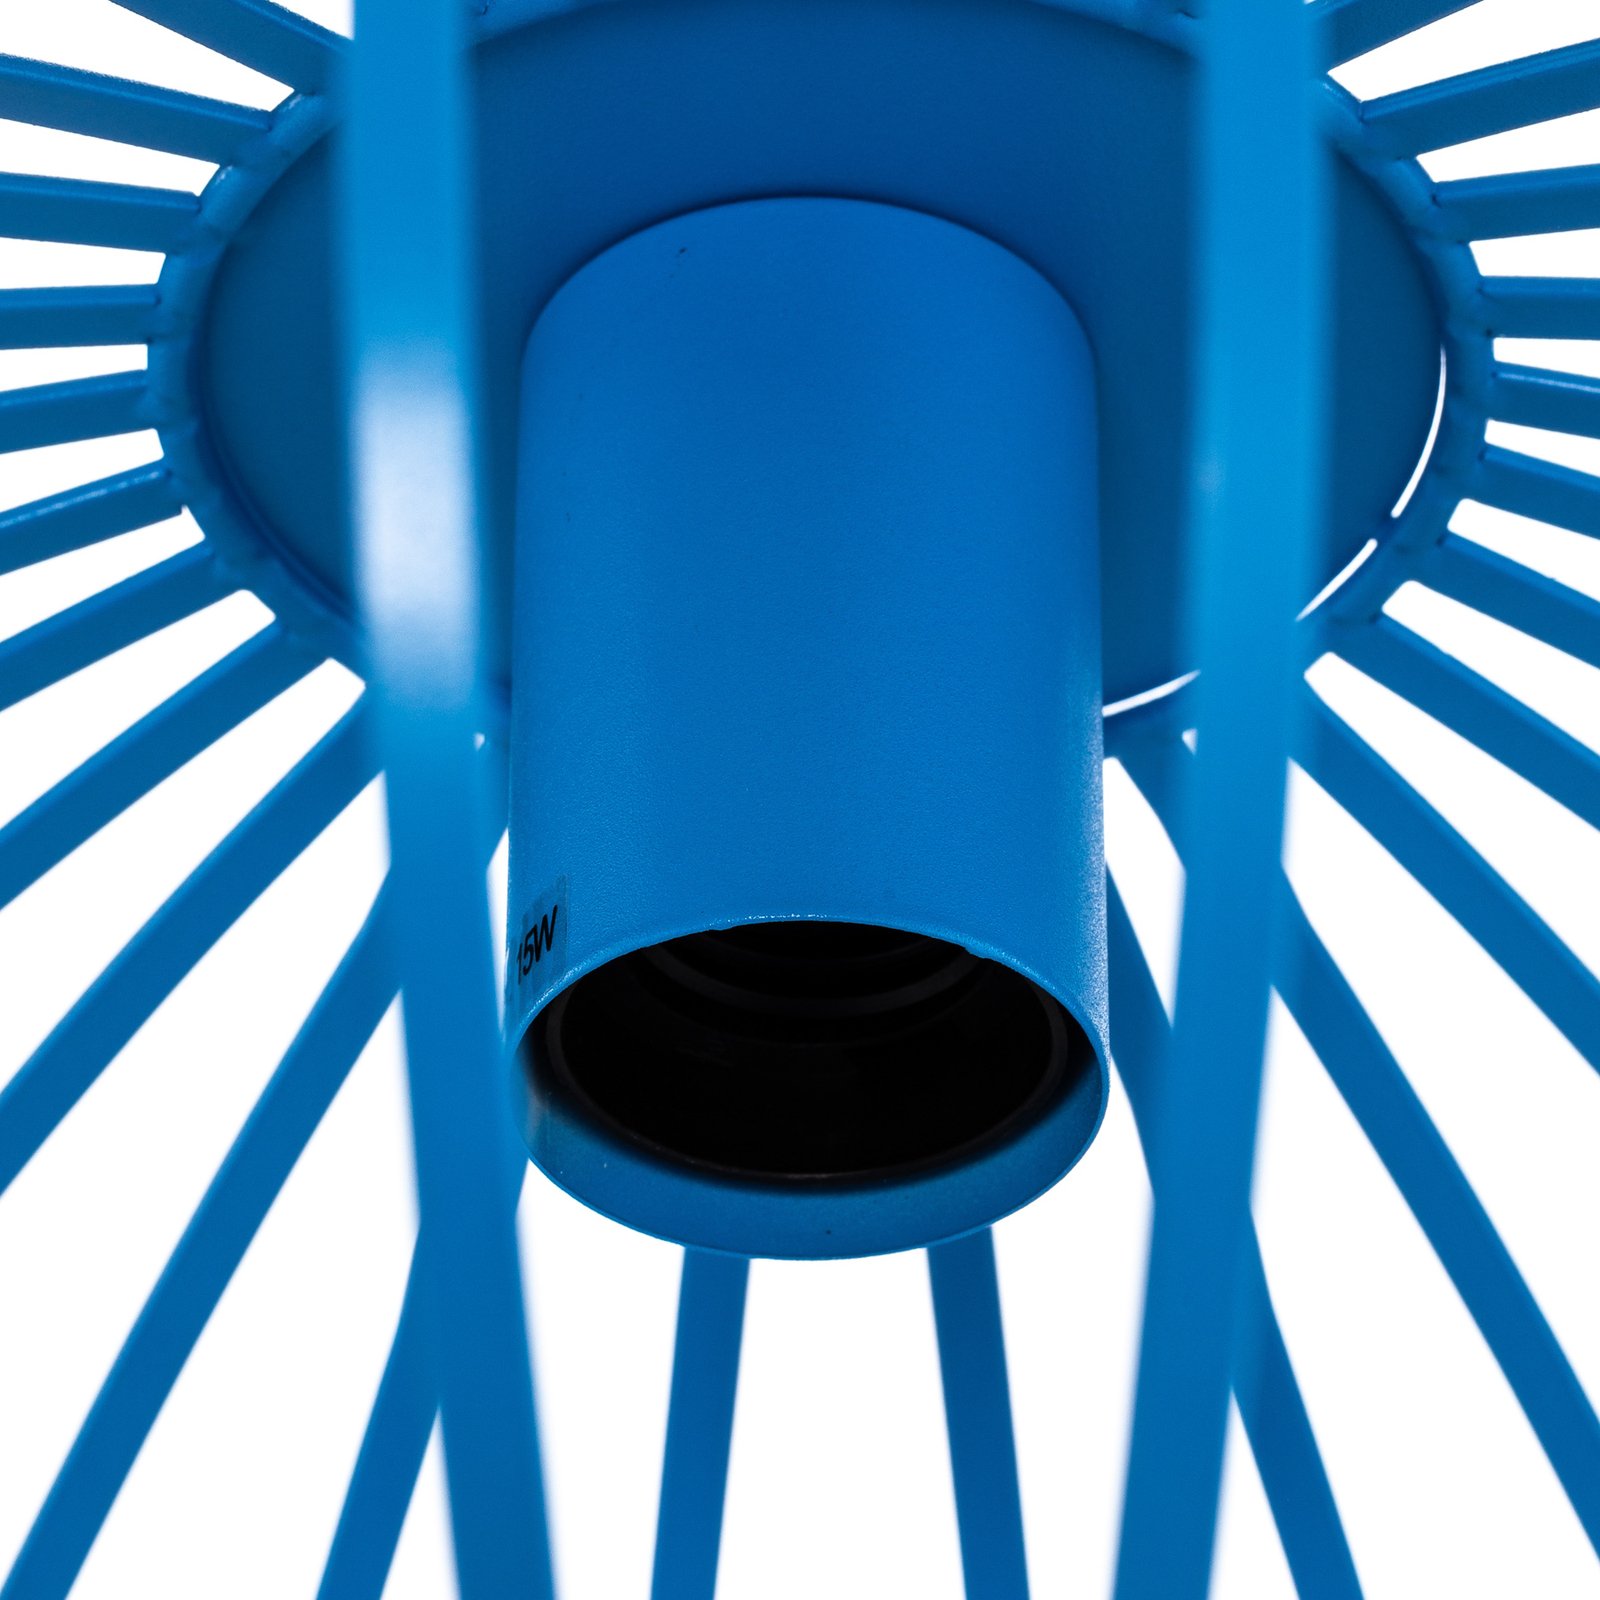 Závesná lampa Lindby Maivi, modrá, 40 cm, železo, klietka